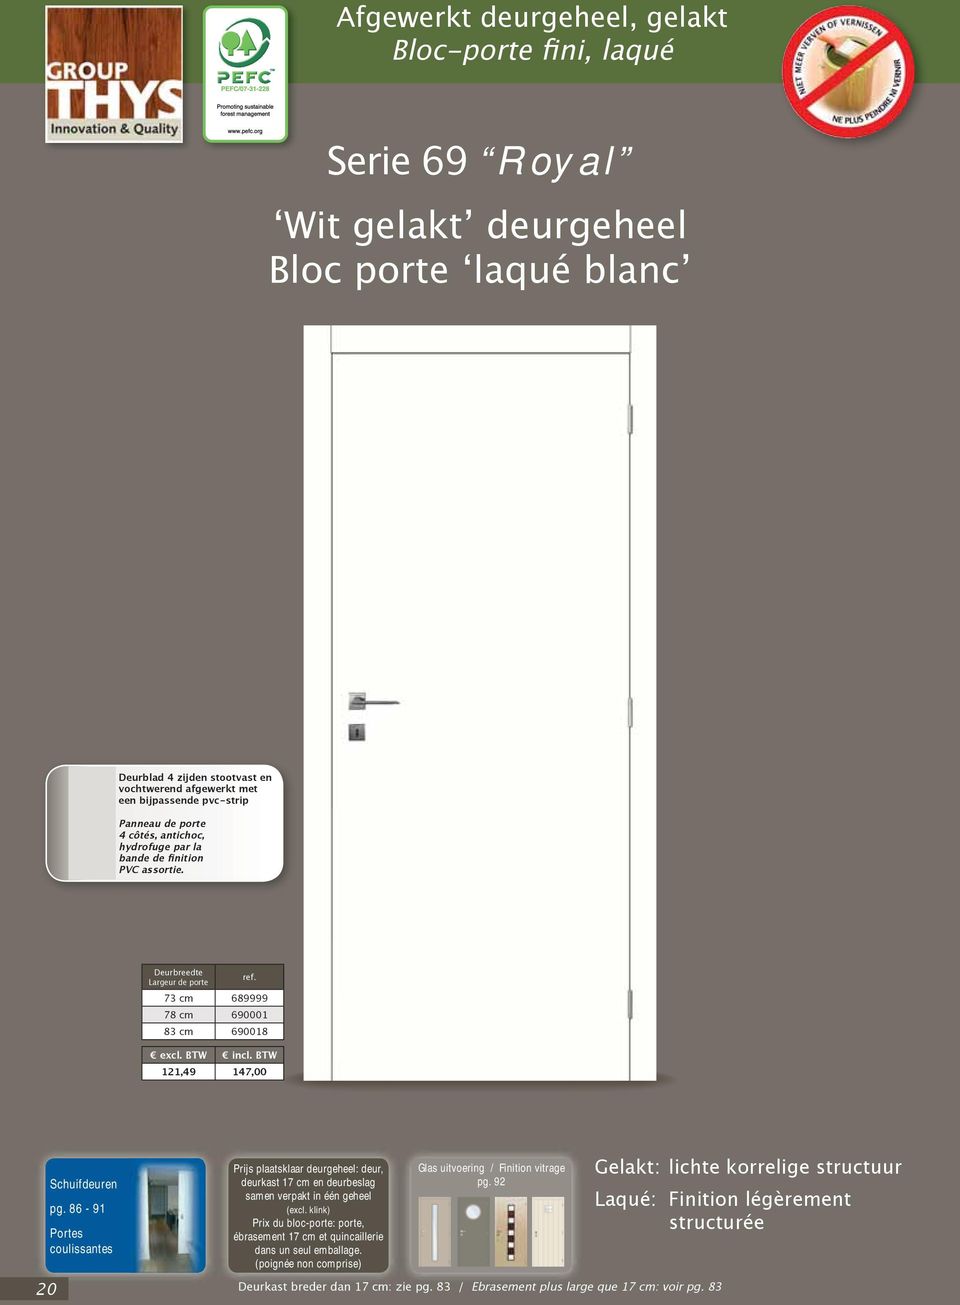 86-91 Portes coulissantes 20 Prijs plaatsklaar deurgeheel: deur, deurkast 17 en deurbeslag samen verpakt in één geheel (excl.